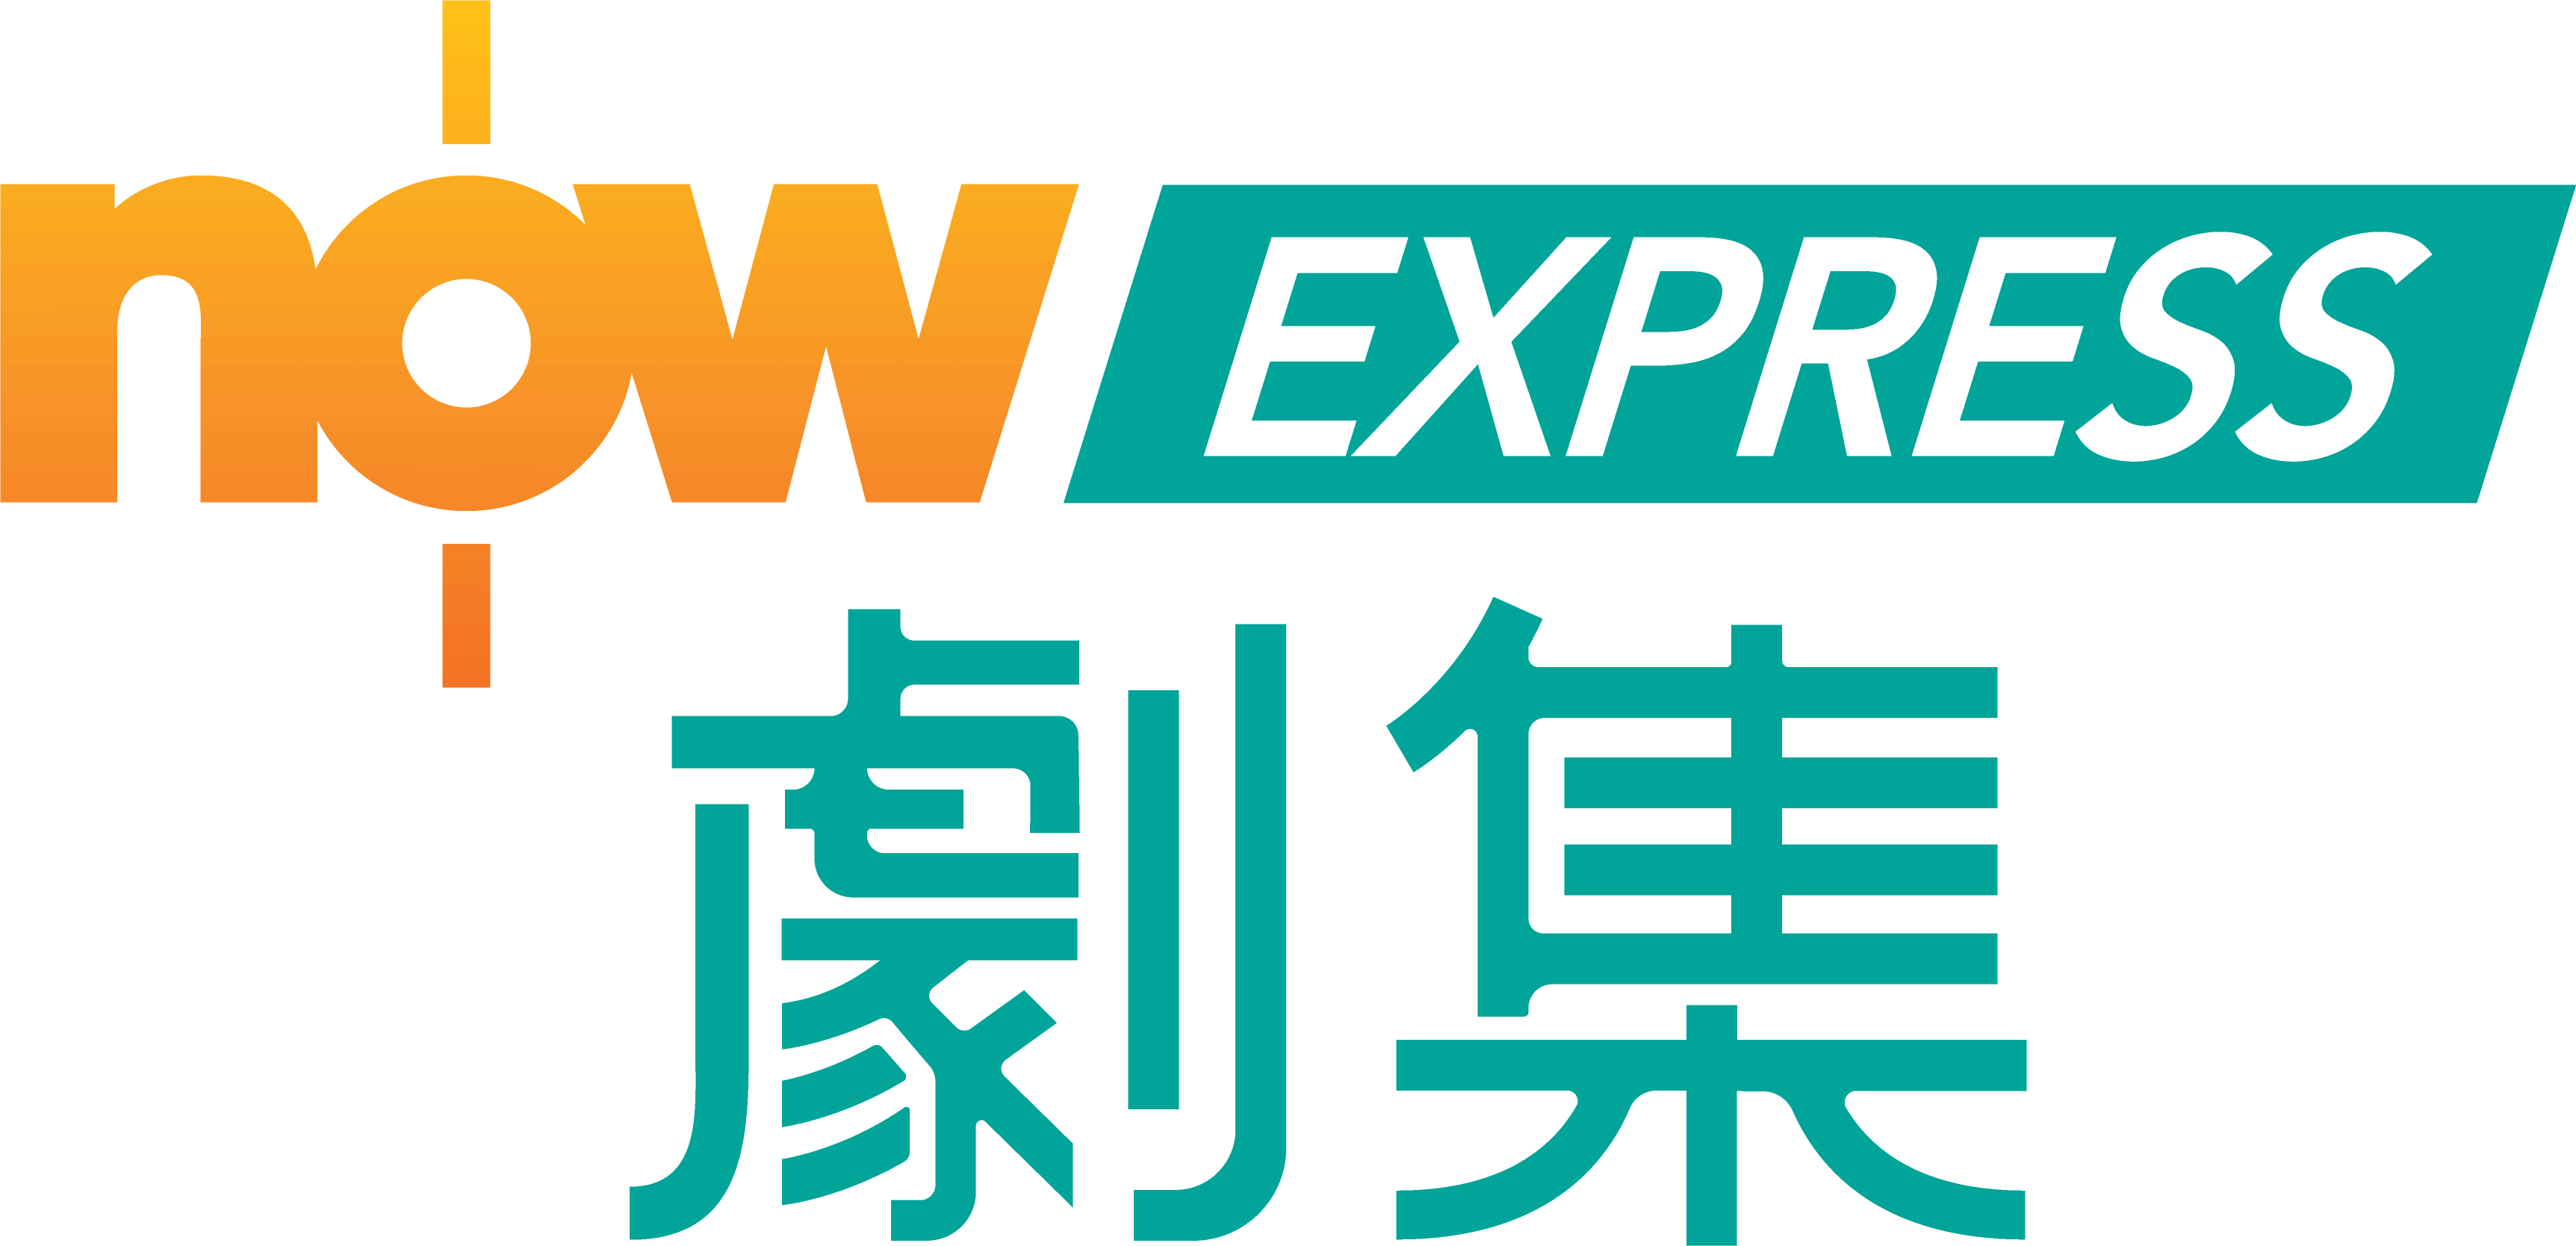 Now 劇集 Express